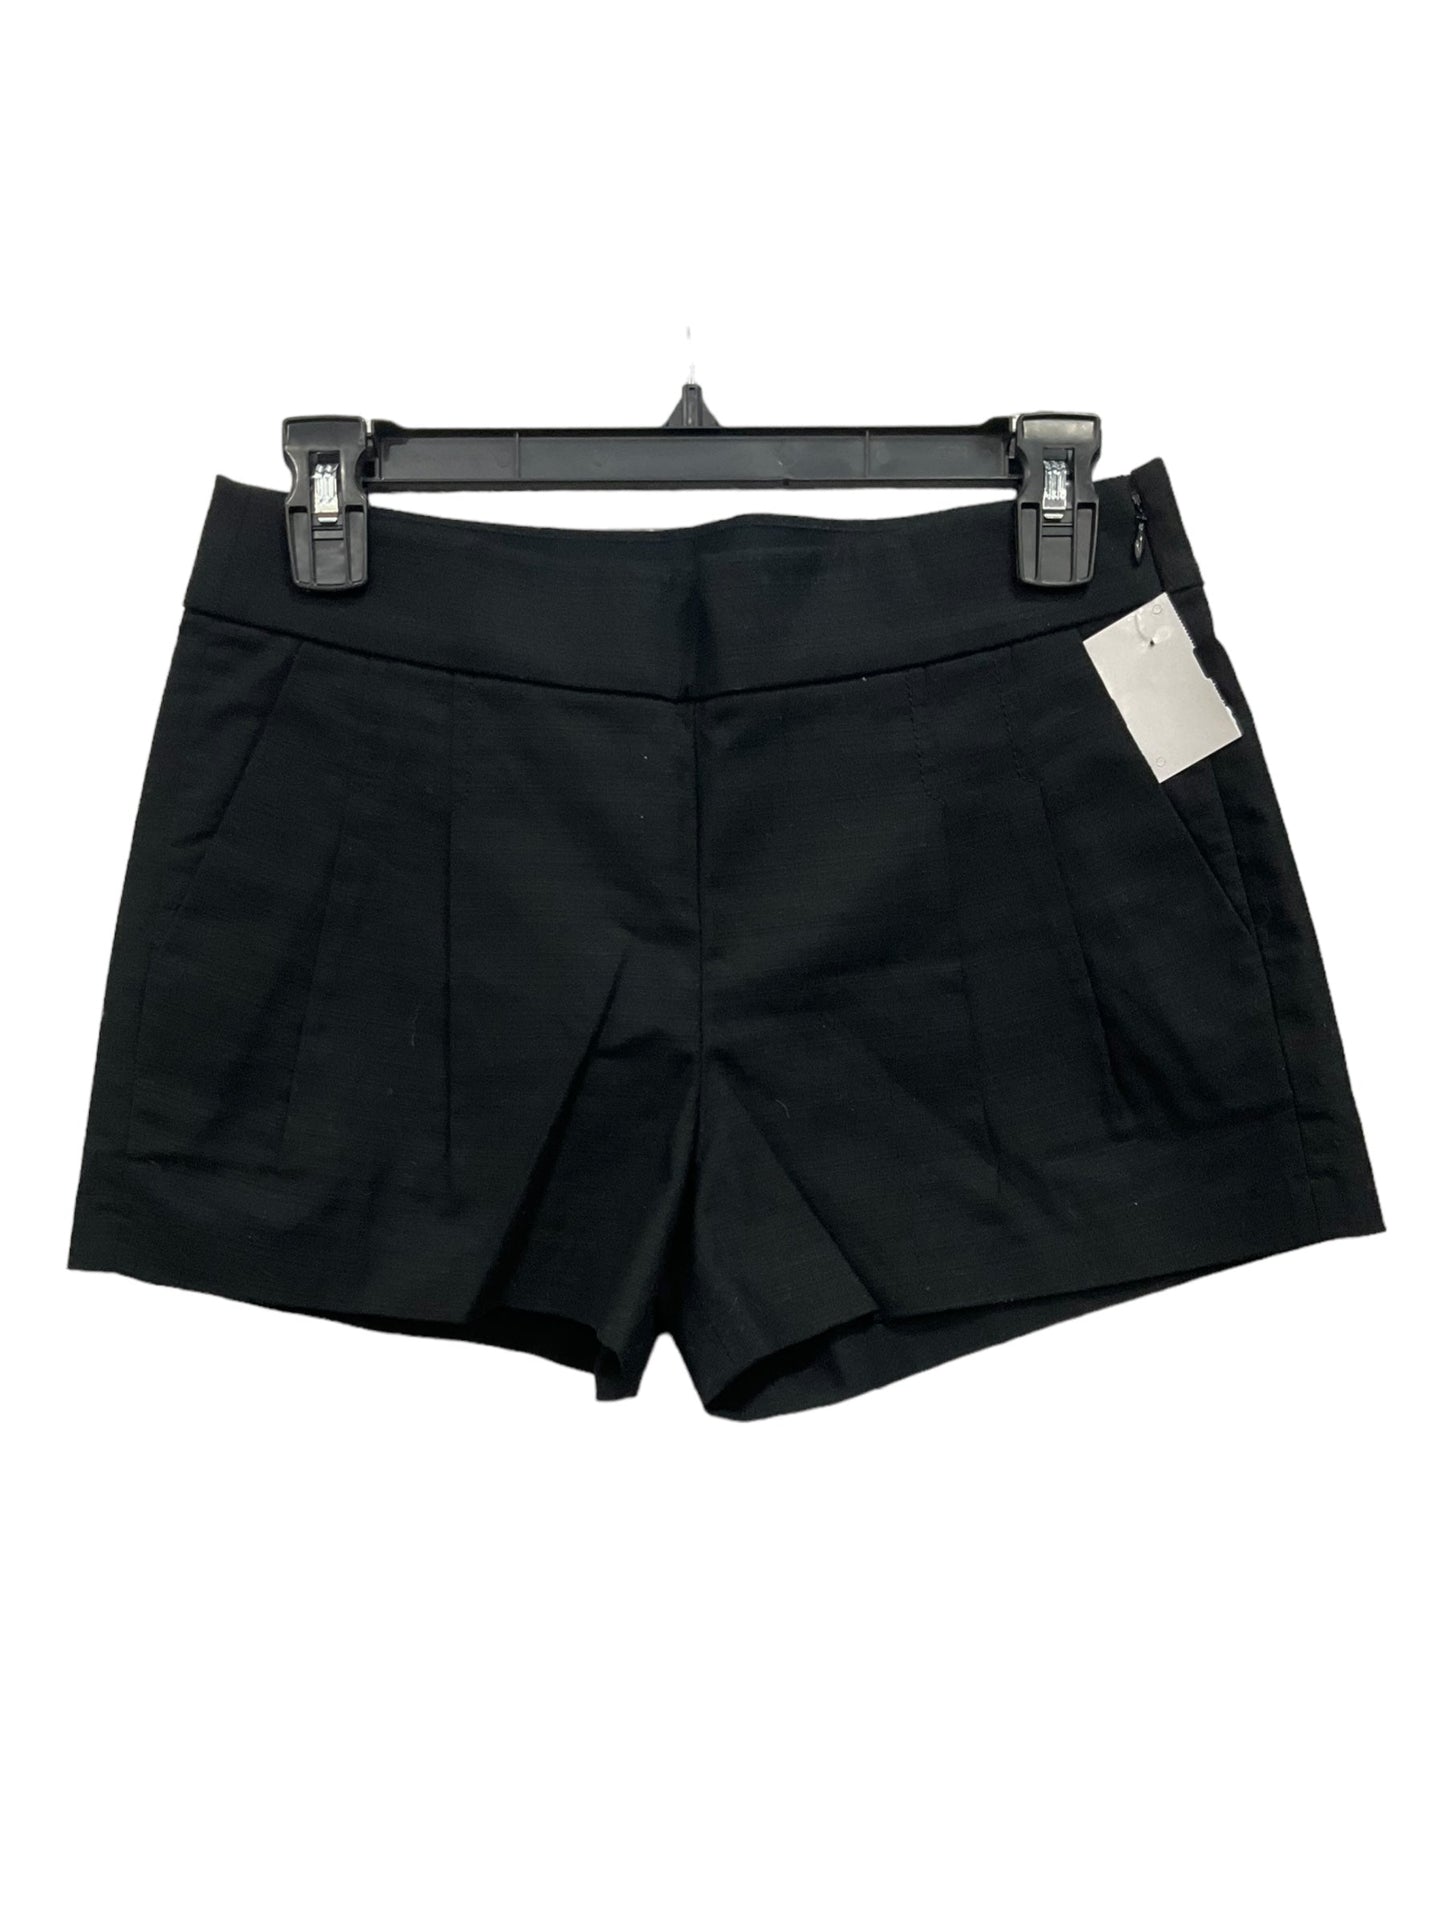 Black Shorts J. Crew, Size 0